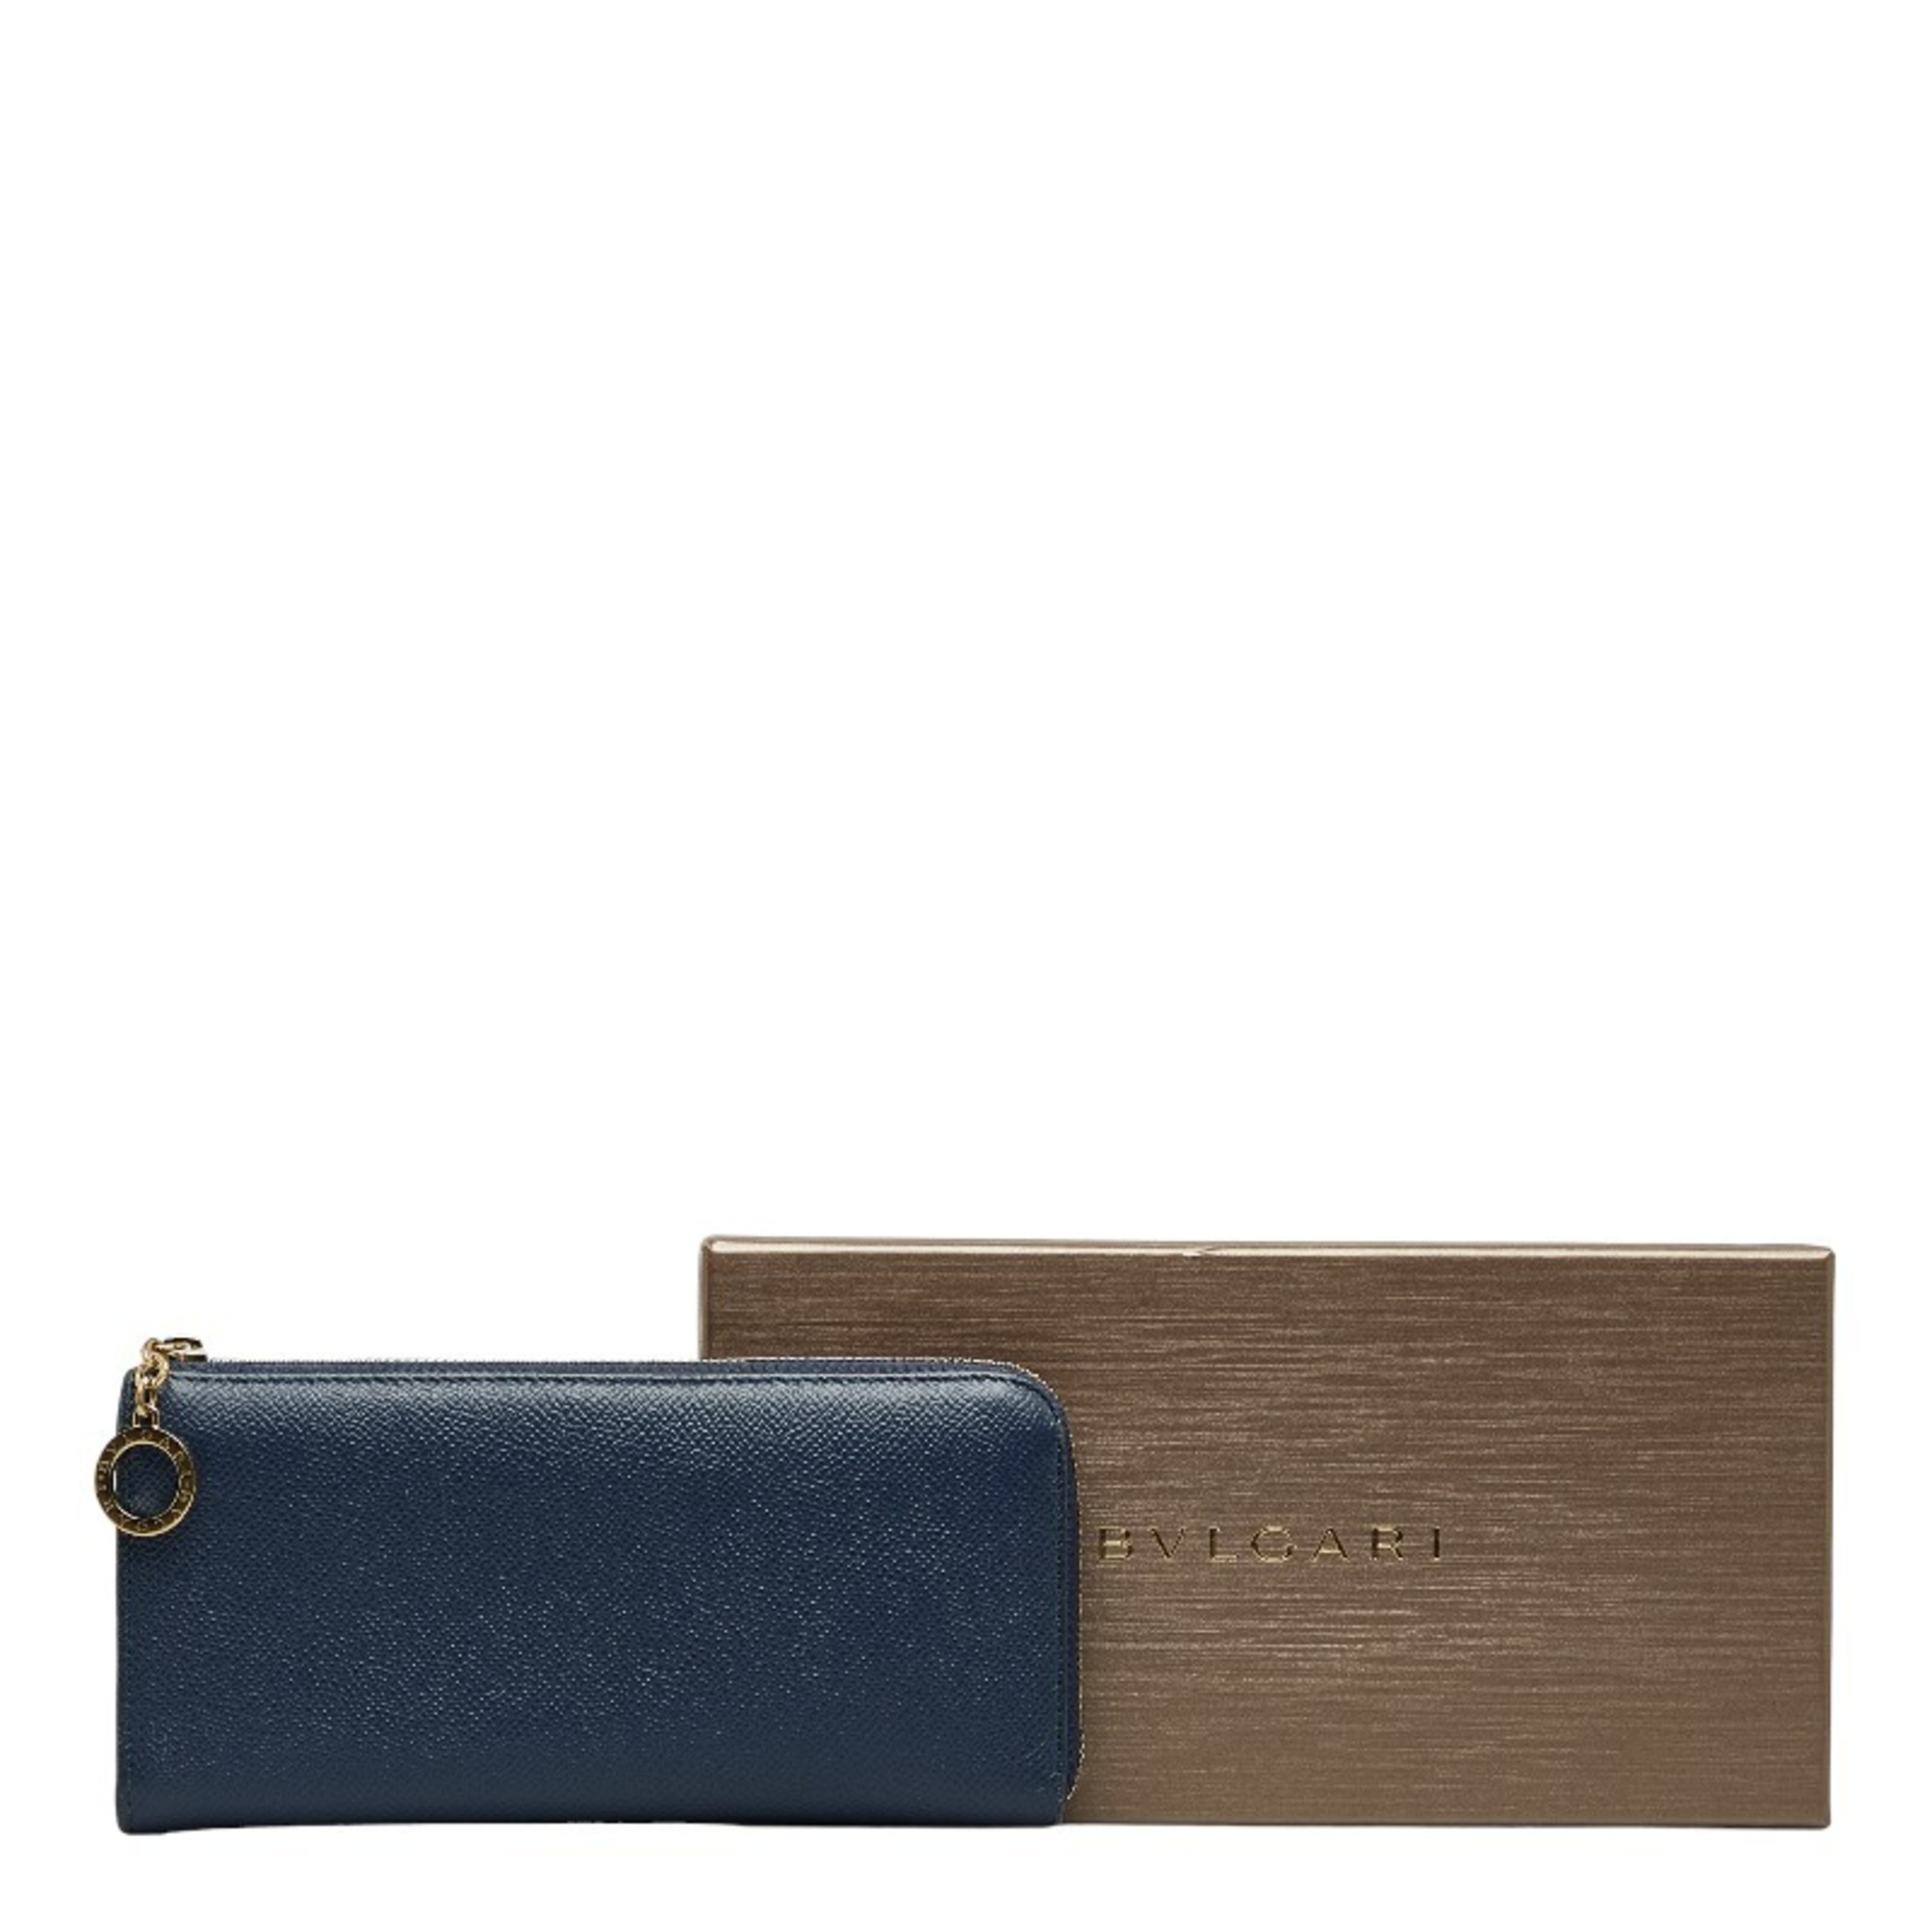 BVLGARI L-shaped long wallet 285331 Blue Leather Women's